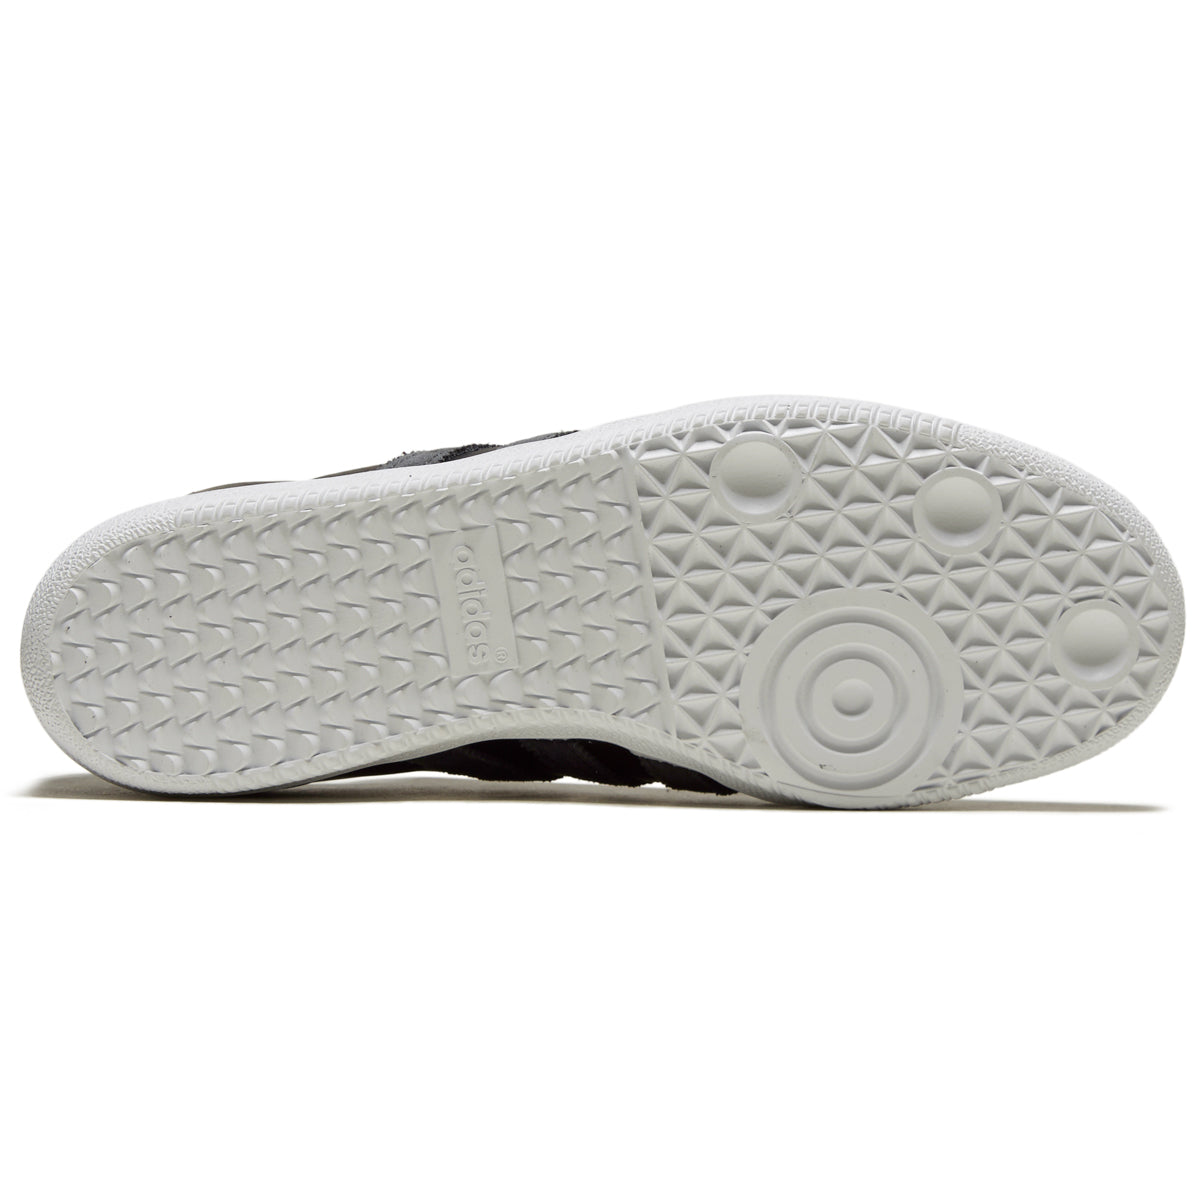 Adidas Samba ADV Shoes - Core Black/Carbon/Silver Metallic image 4